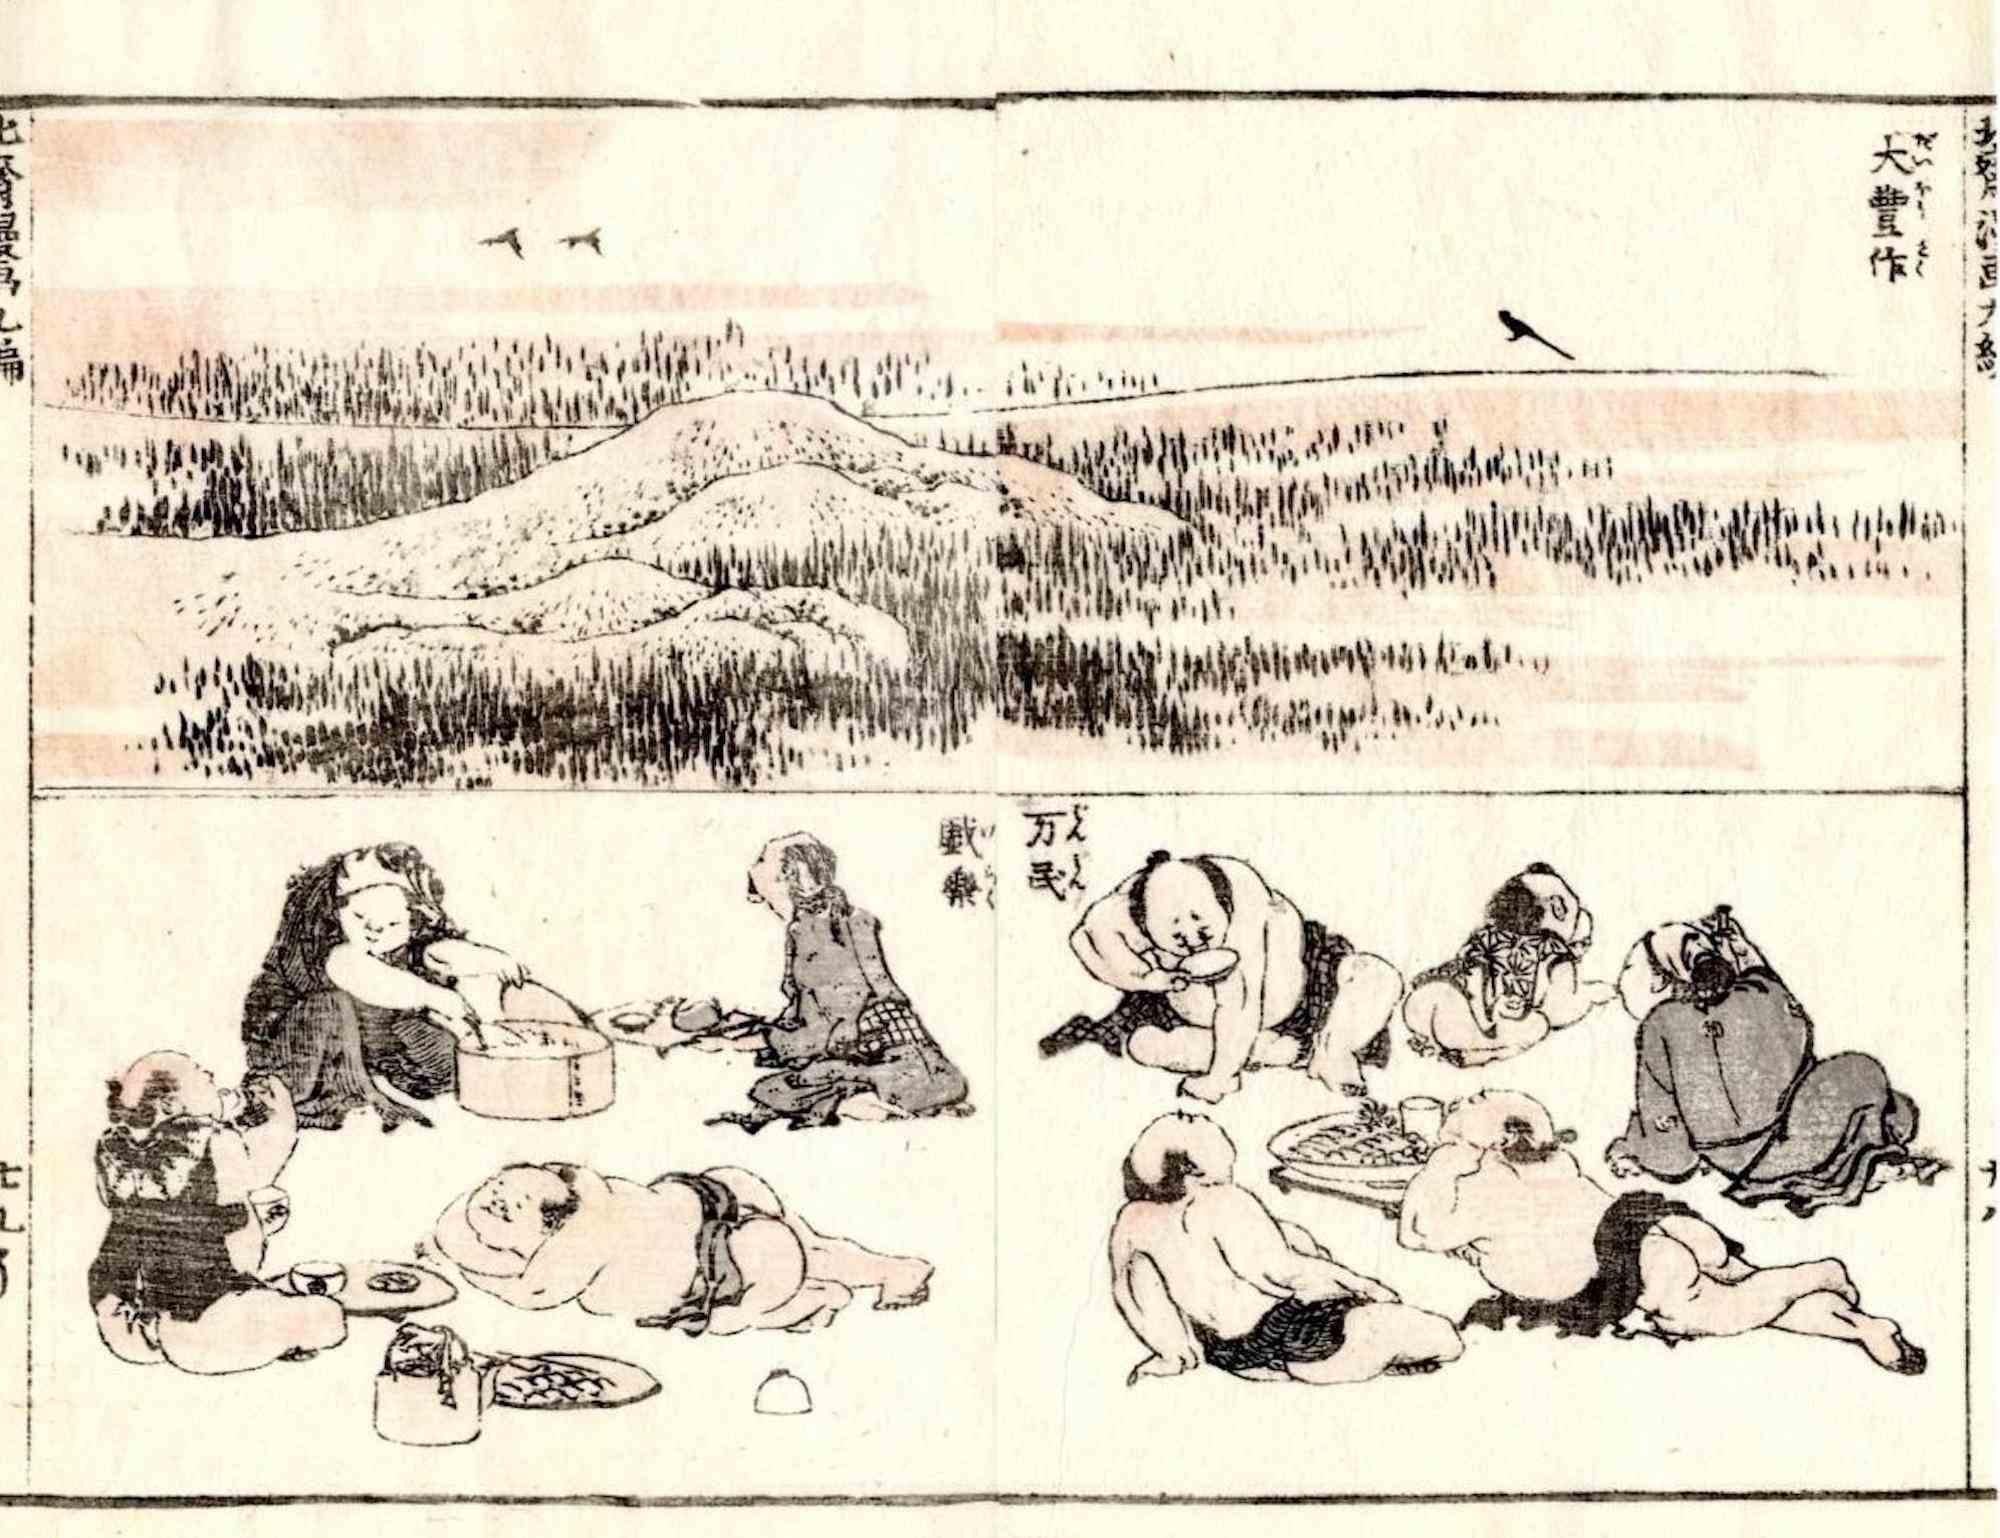 Farmers Eating - Original Woodcut Print by Katsushika Hokusai - 1814